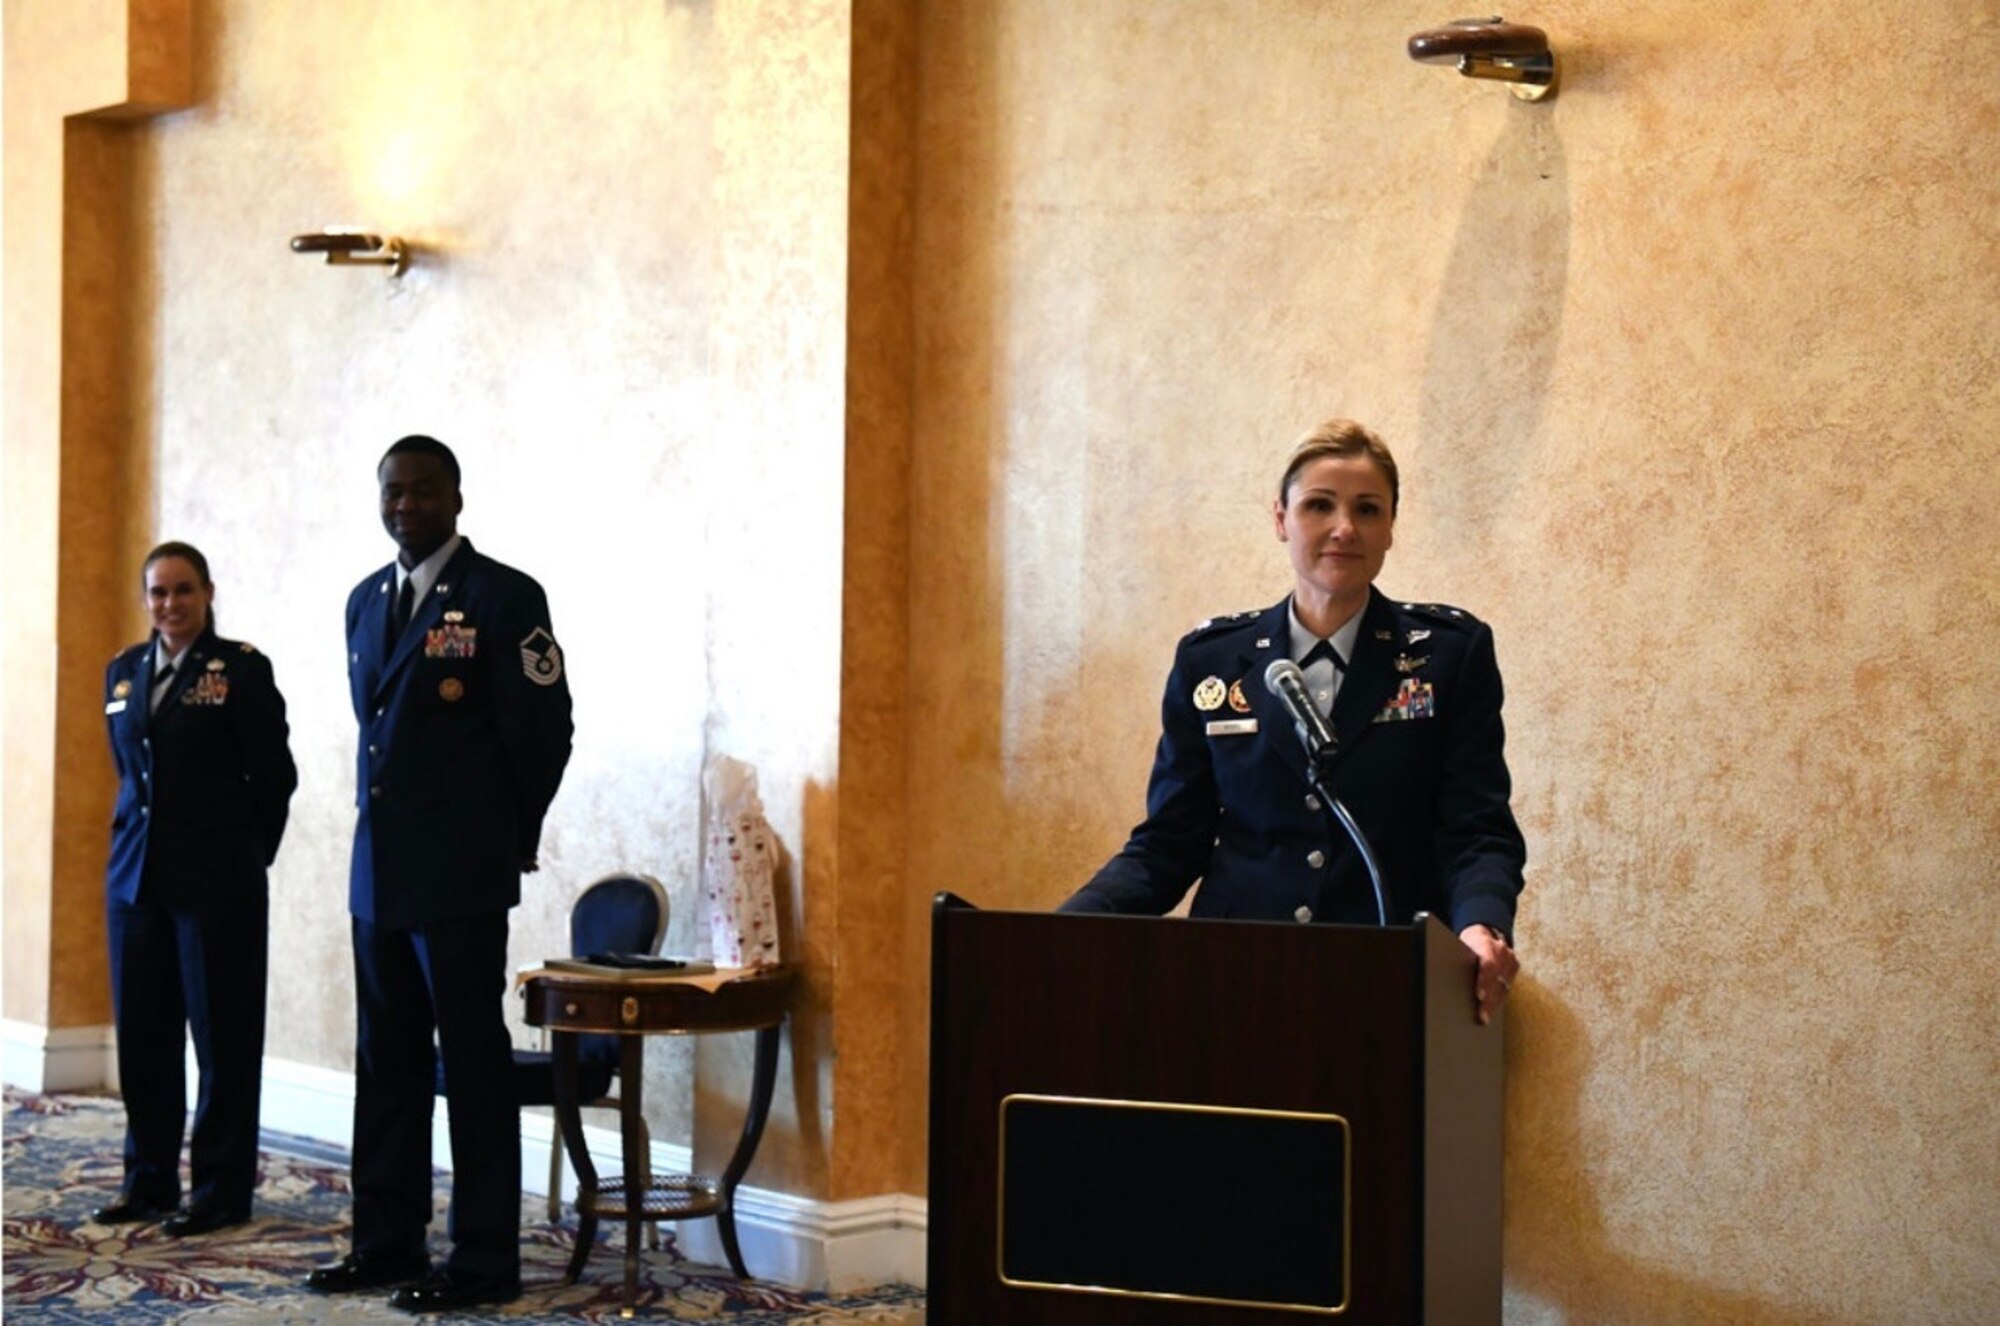 U.S. Air Force Maj. Gen. April D. Vogel speaks during a promotion ceremony at Joint Base Myer-Henderson Hall in Arlington, Virginia, April 8, 2022.